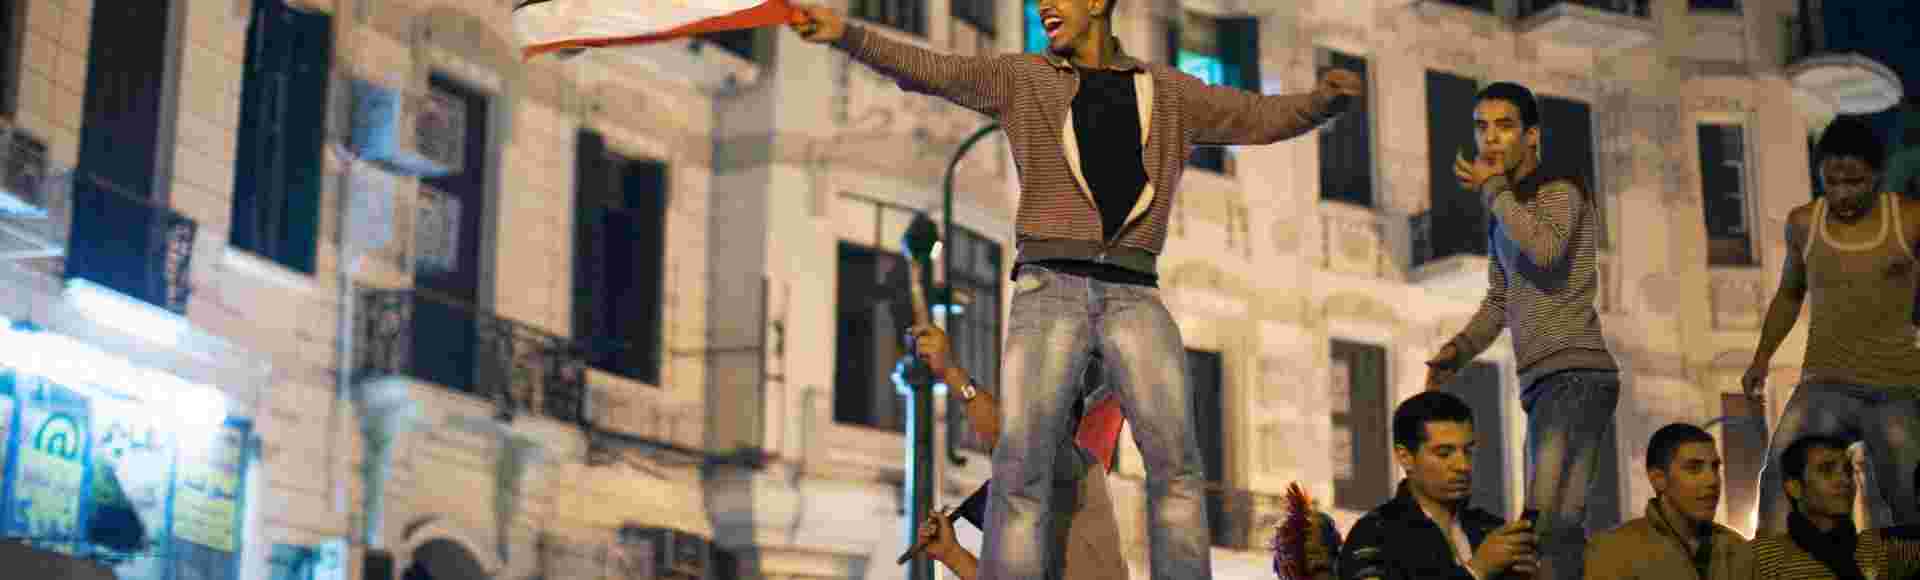 Demonstrators on the streets of Cairo, Egypt. Credit: Jake Lyell / Alamy Stock Photo.